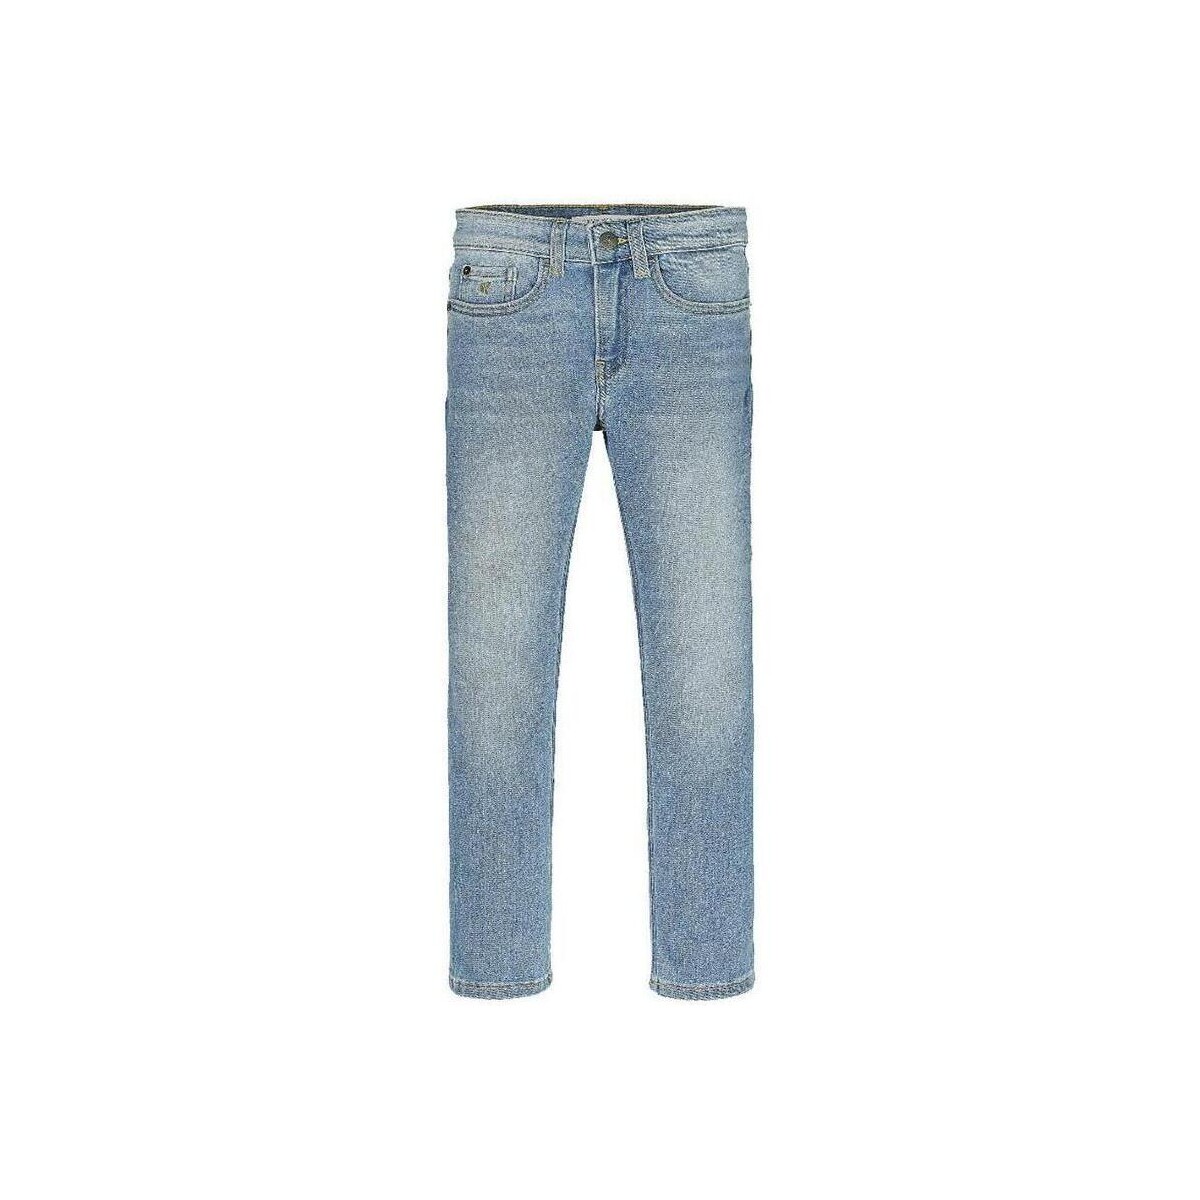 Abbigliamento Bambino Pantaloni Calvin Klein Jeans JEANS. DENIM Blu